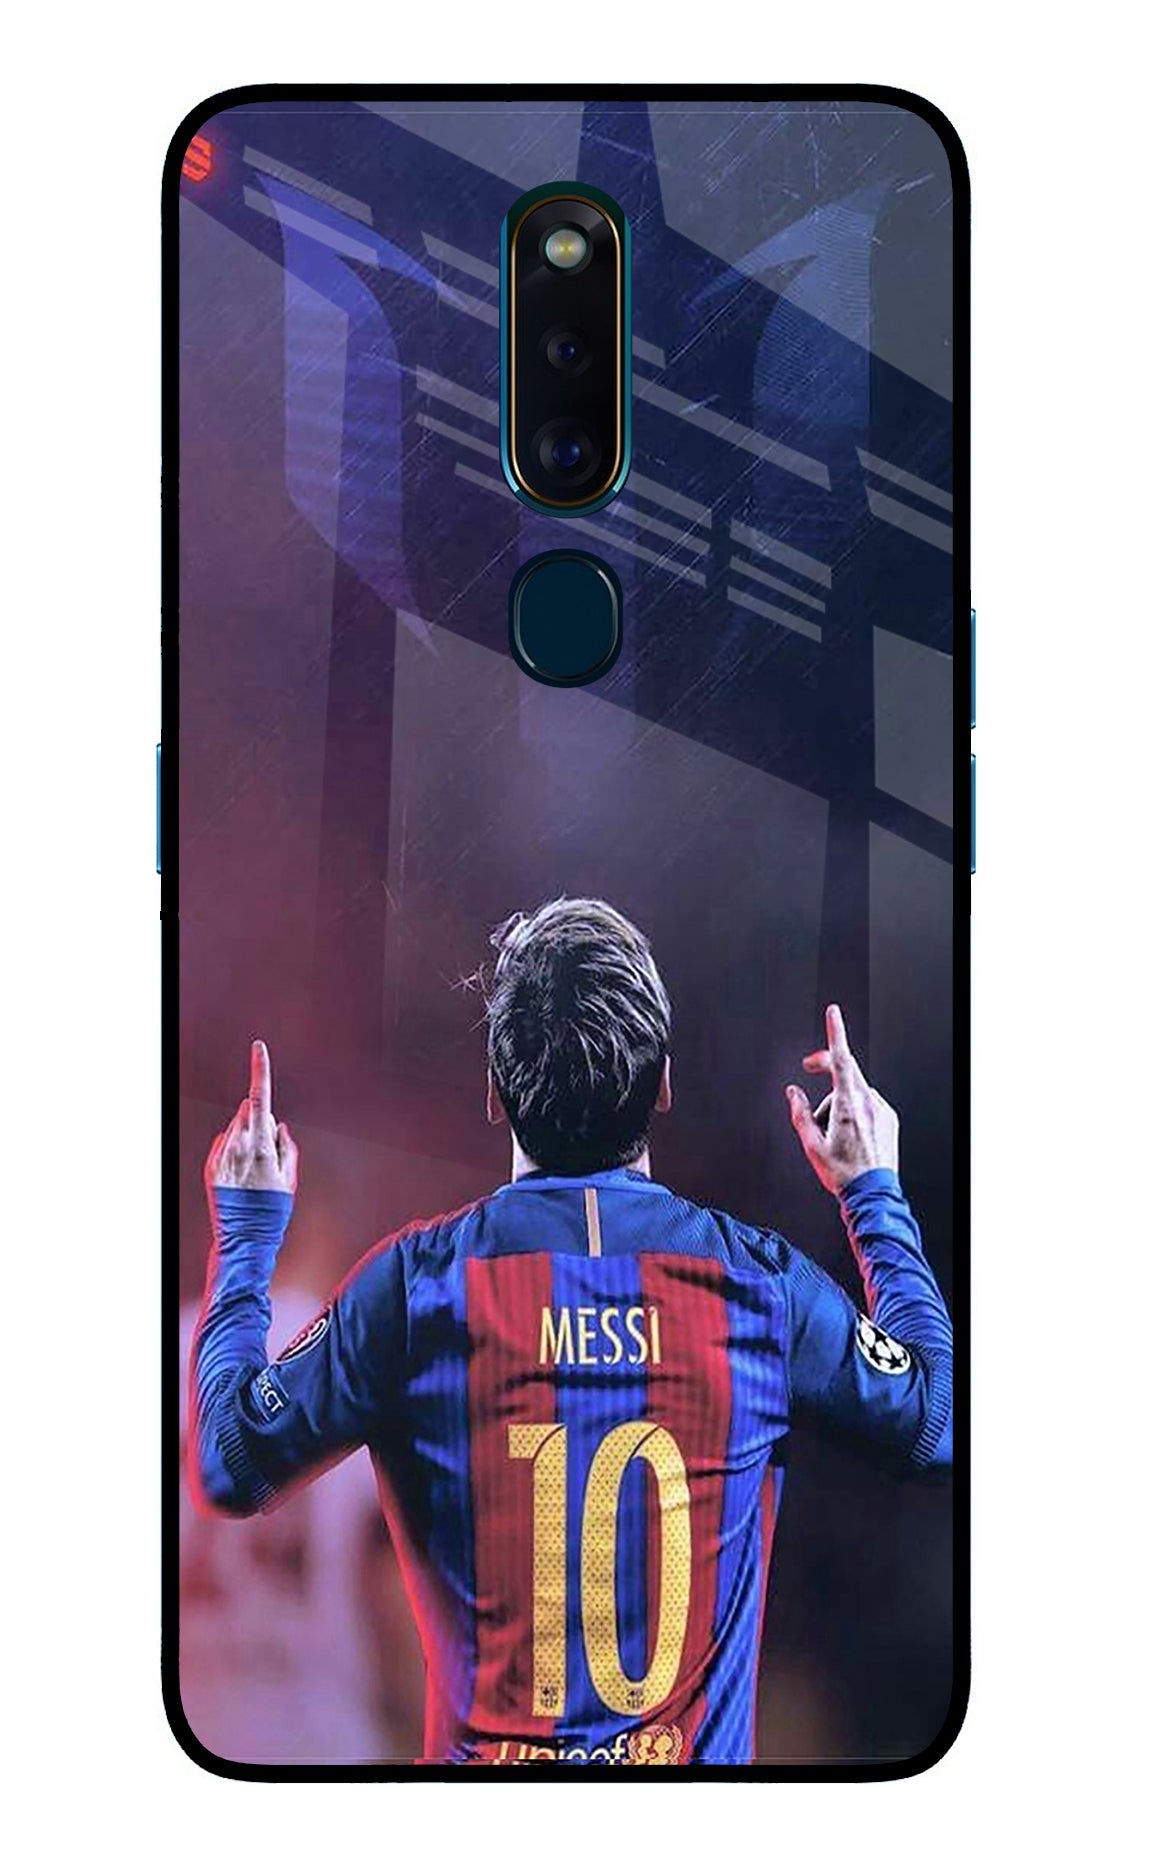 Messi Oppo F11 Pro Glass Case